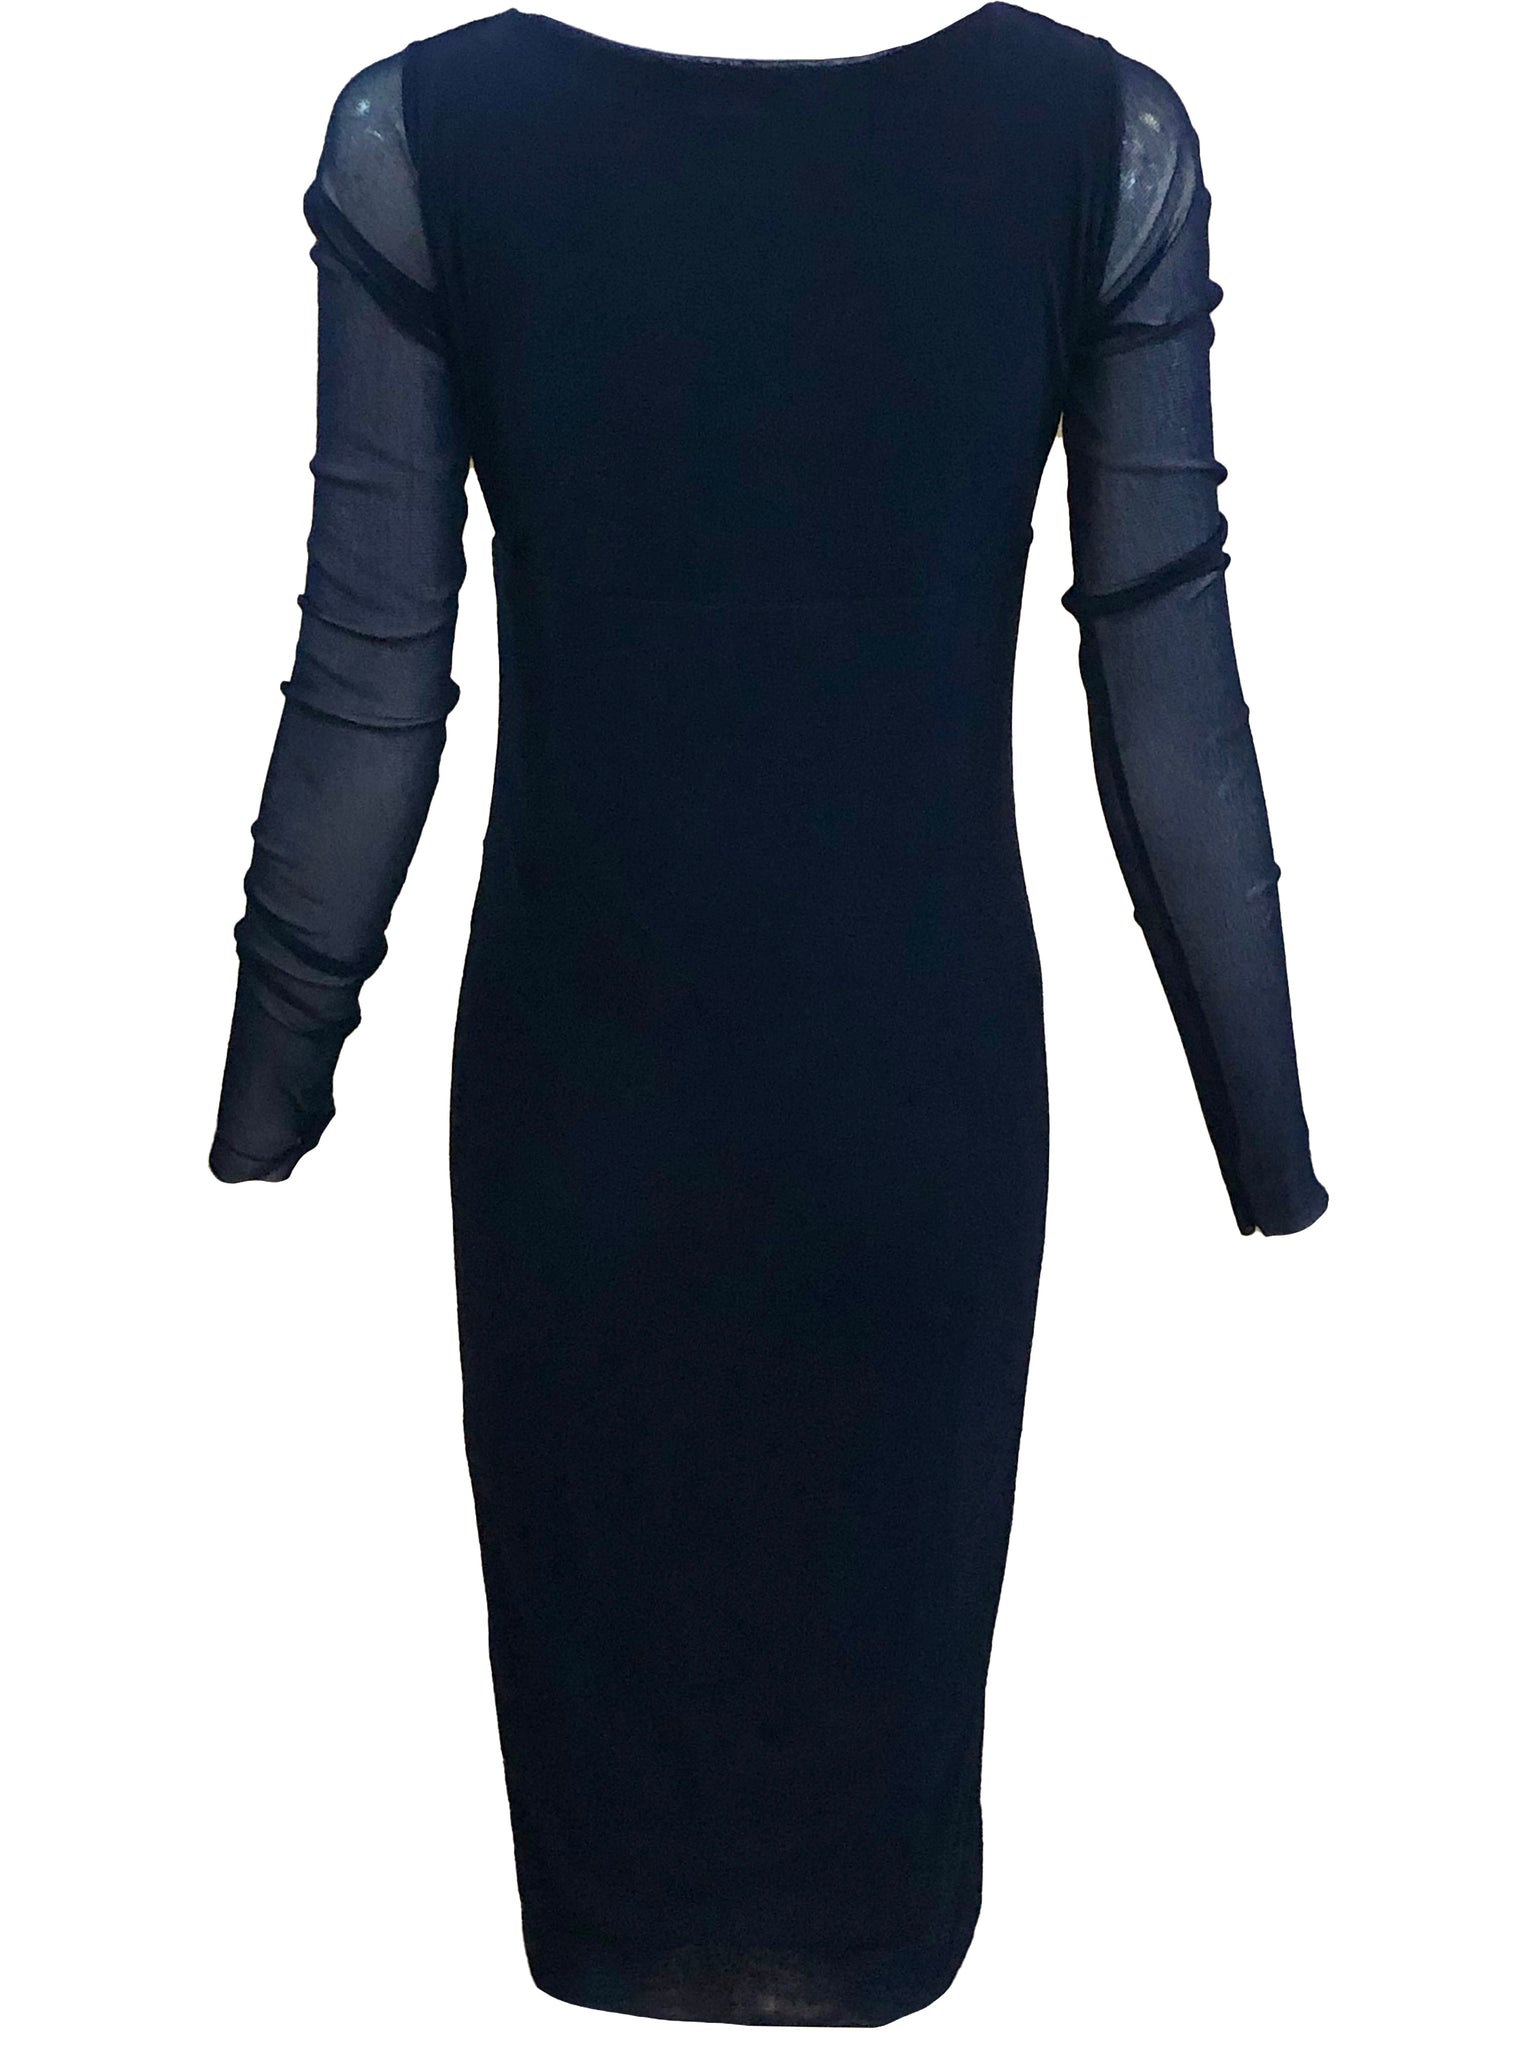 Fuzzi Contemporary Navy Blue Mesh Body Con Dress BACK 3 of 4